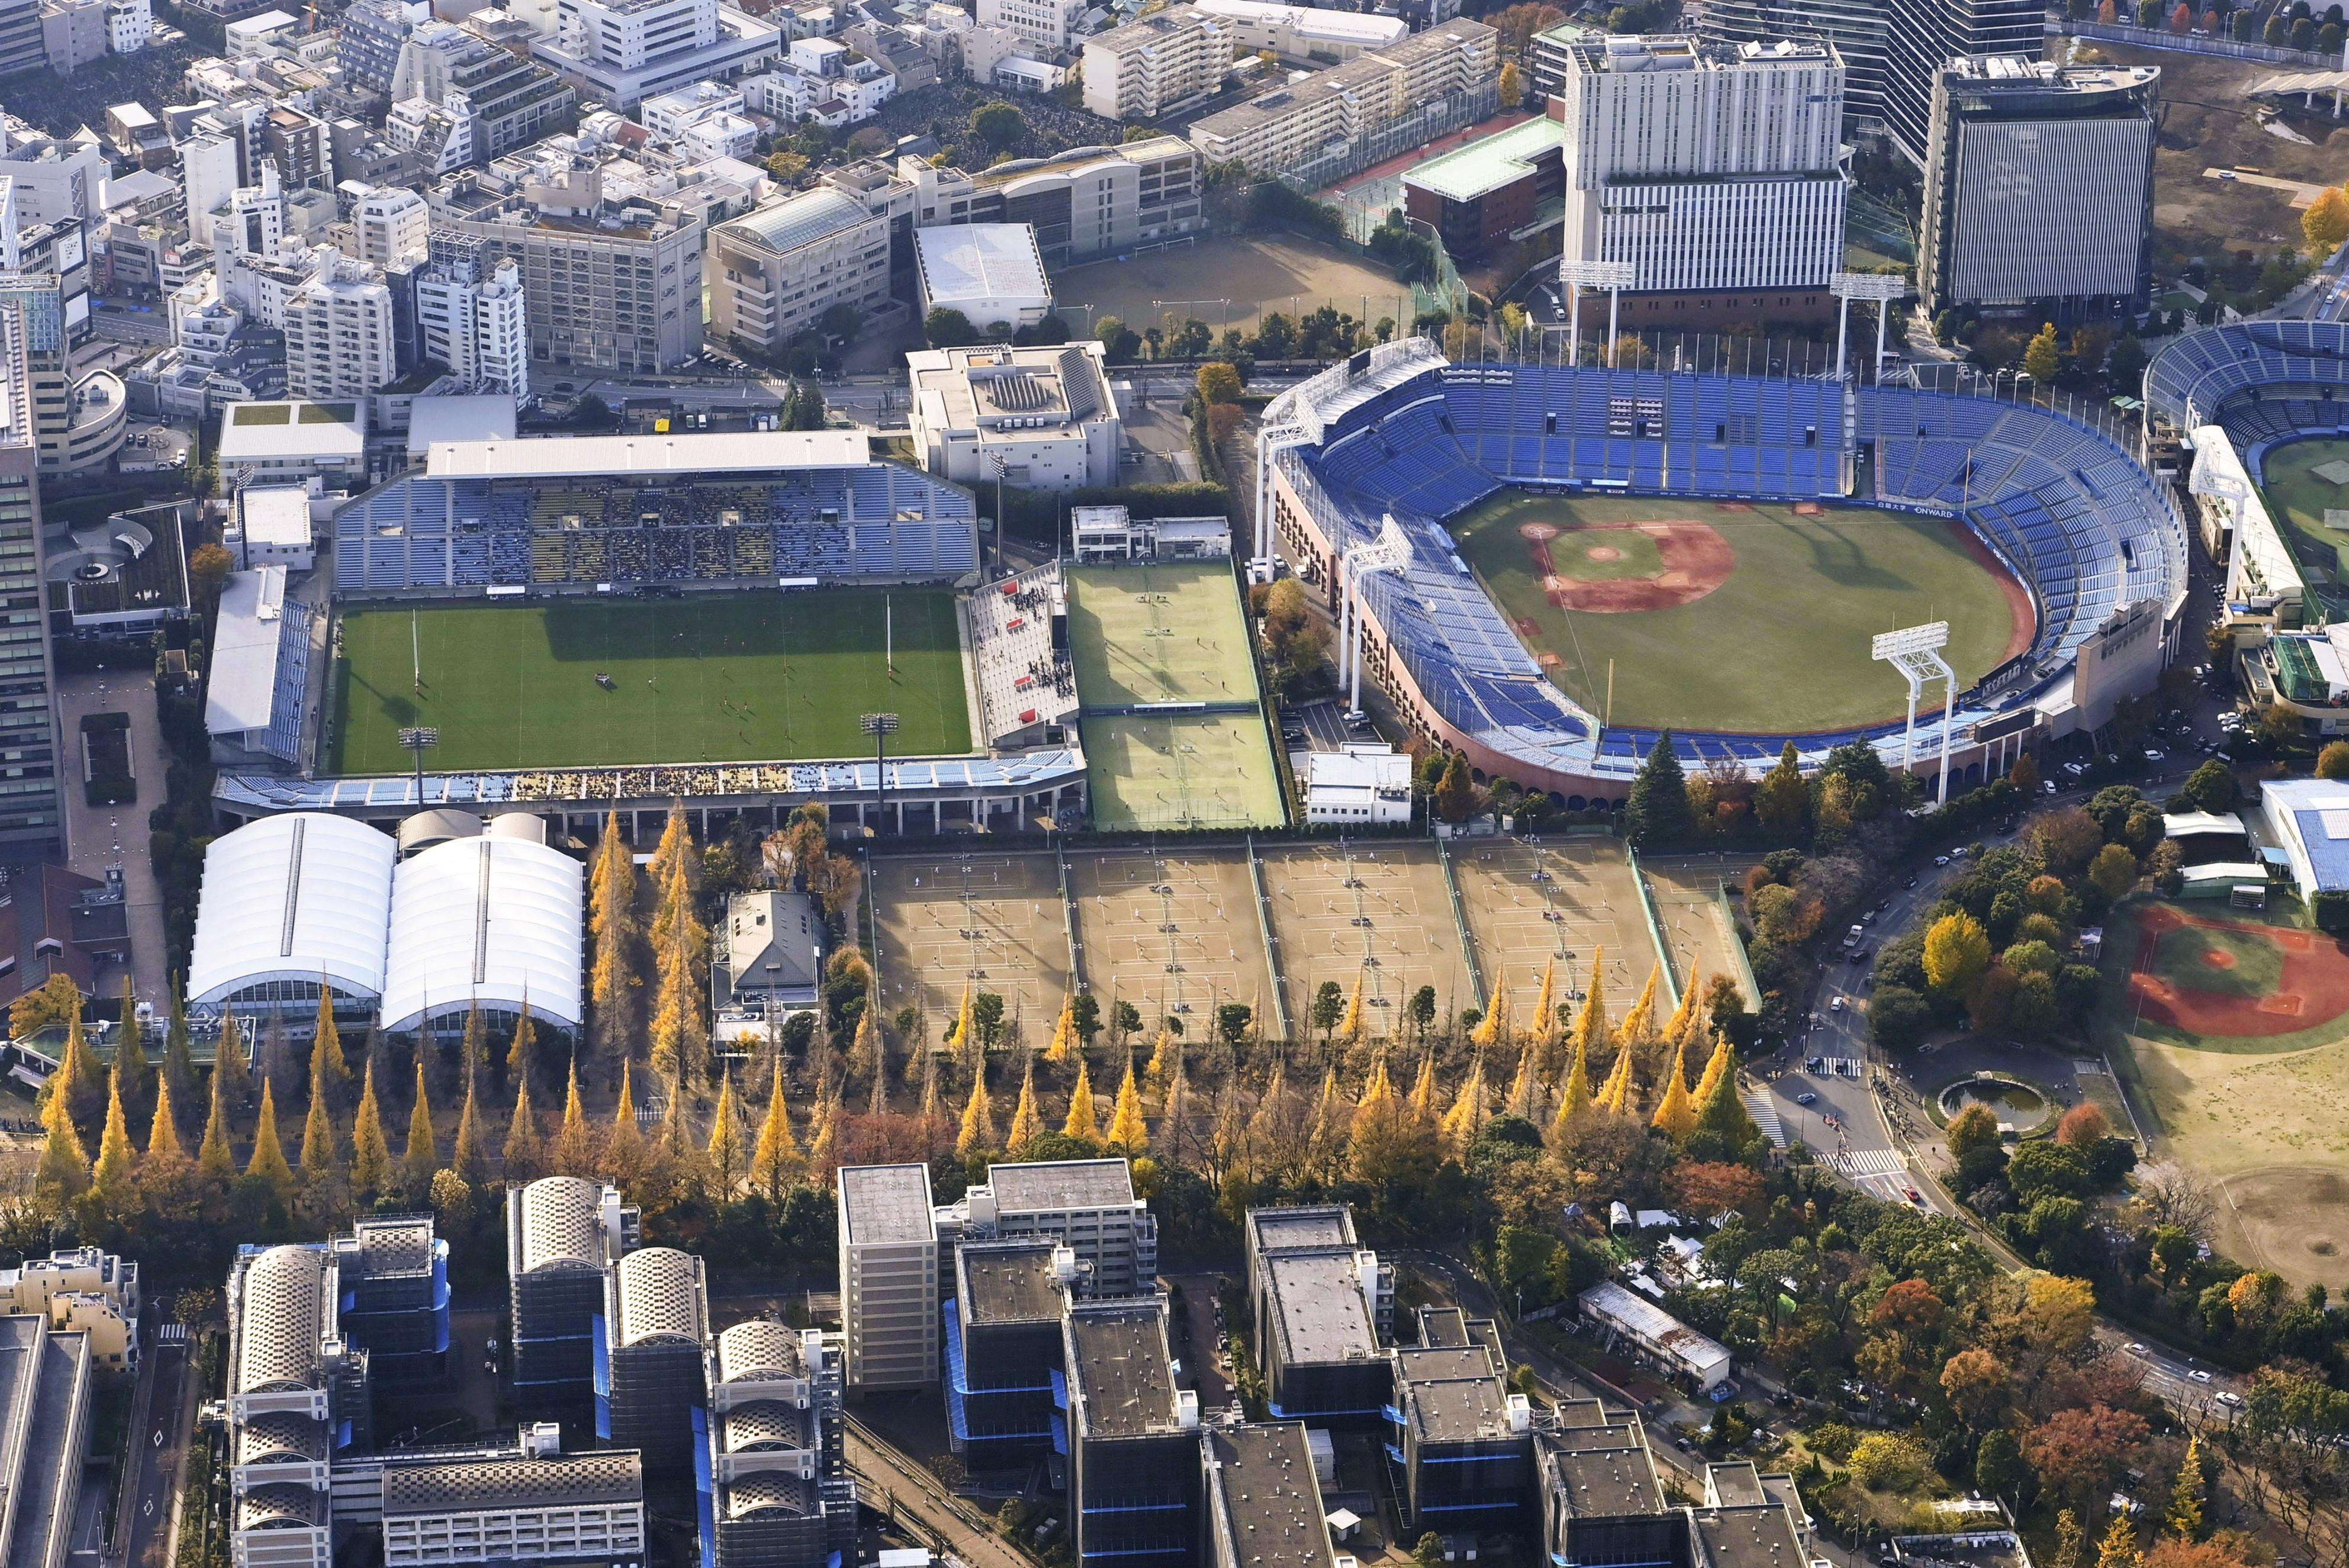 Aerial view shows Meiji Jingu Stadium and Chichibunomiya Rugby Stadium in Tokyo